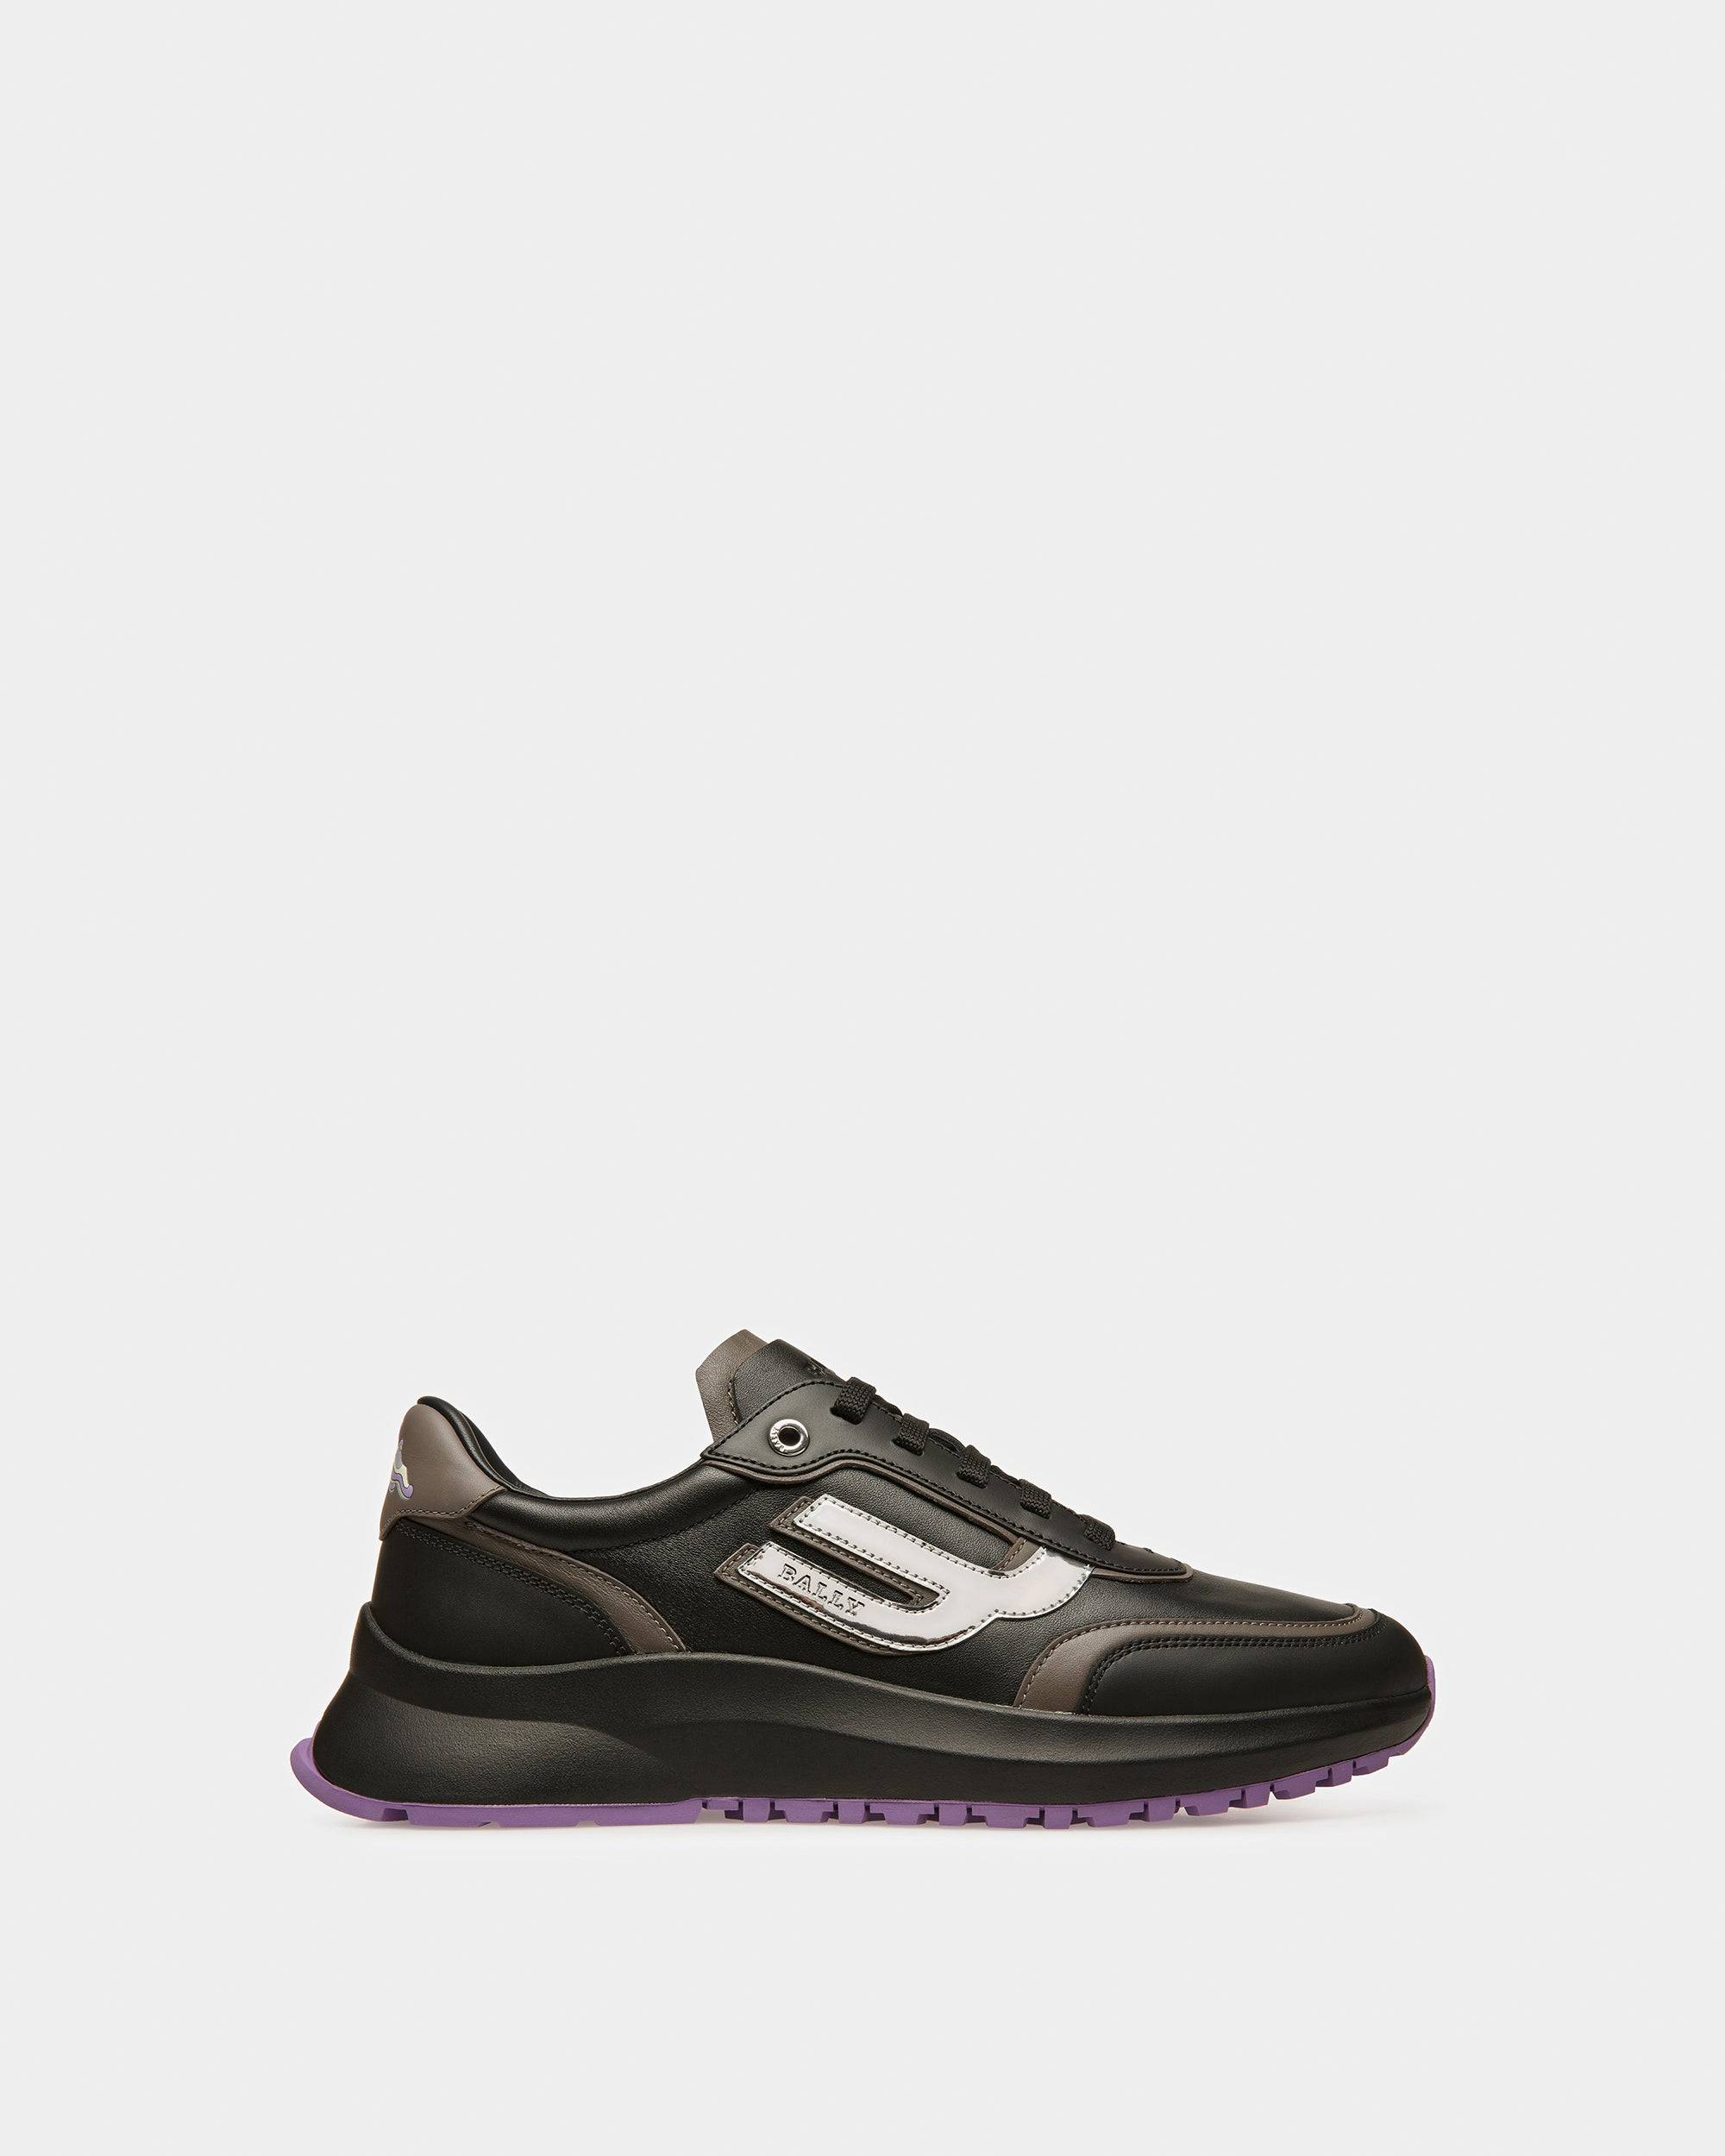 Demmy Sneaker In Pelle Nera E Antracite - Bally - 01